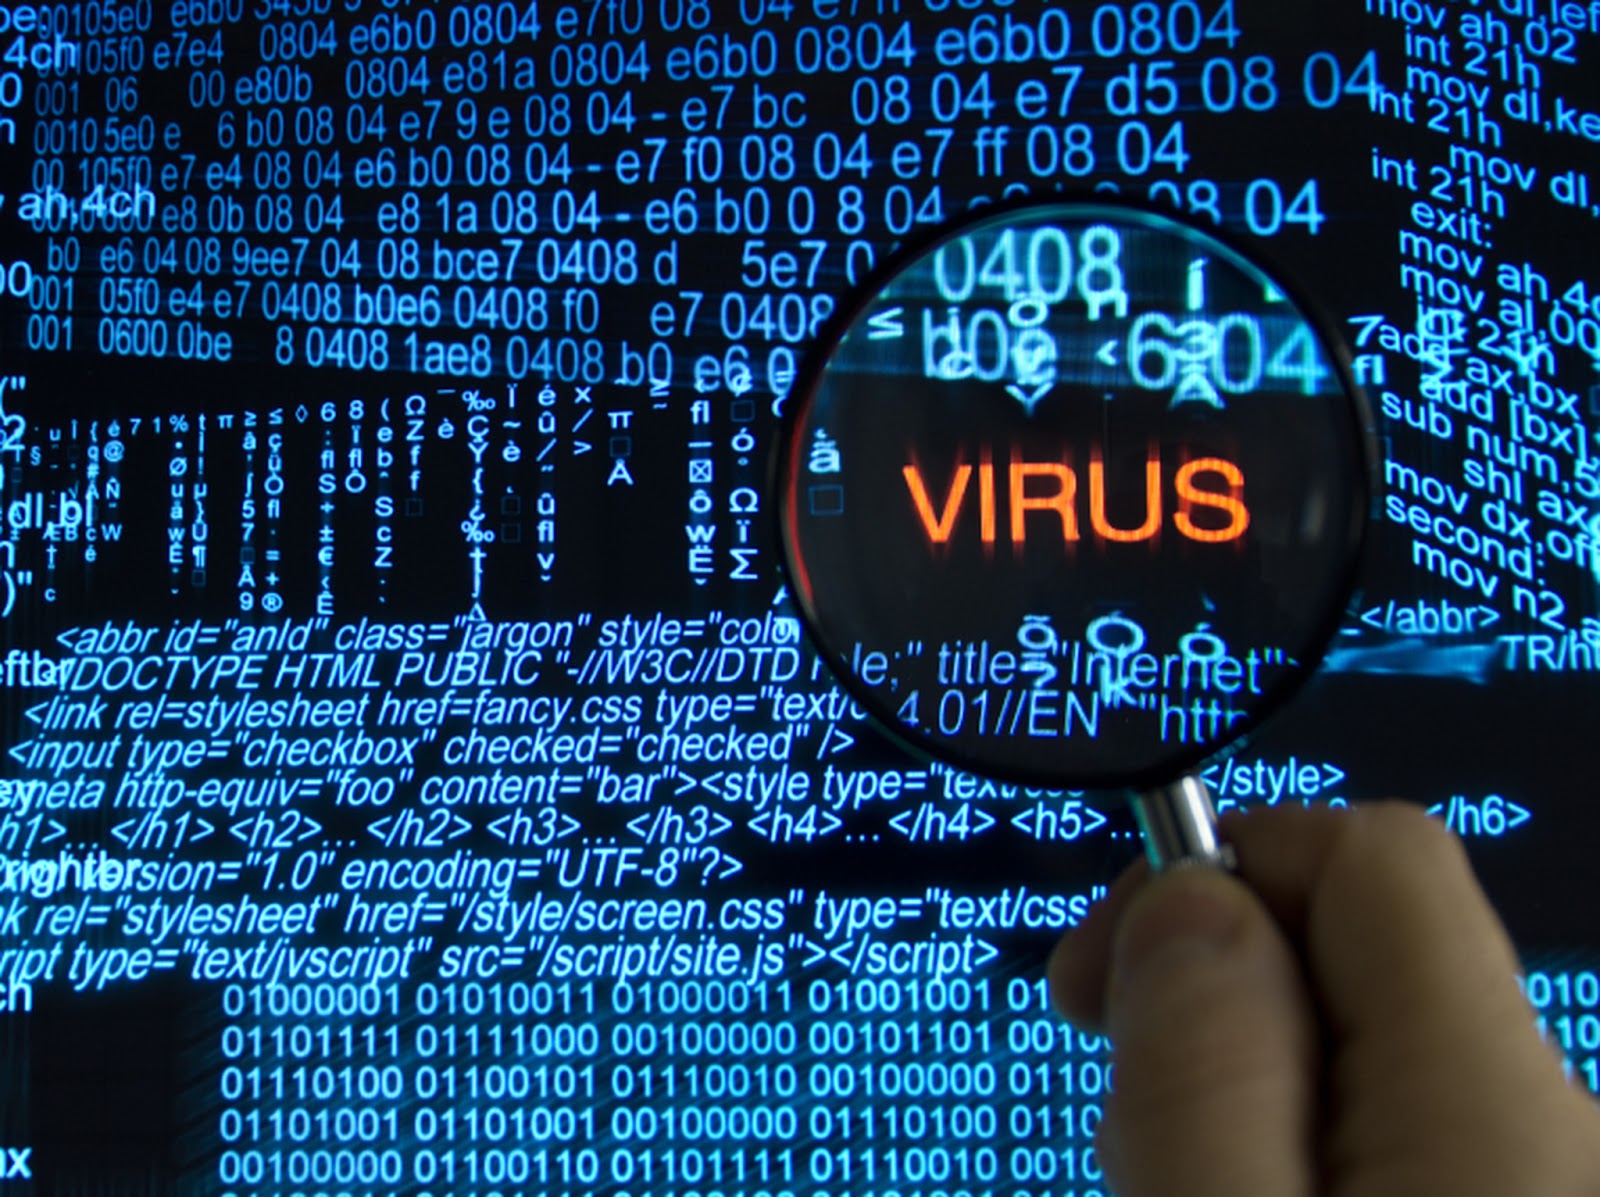 The Top 3 Most Dangerous Computer Viruses